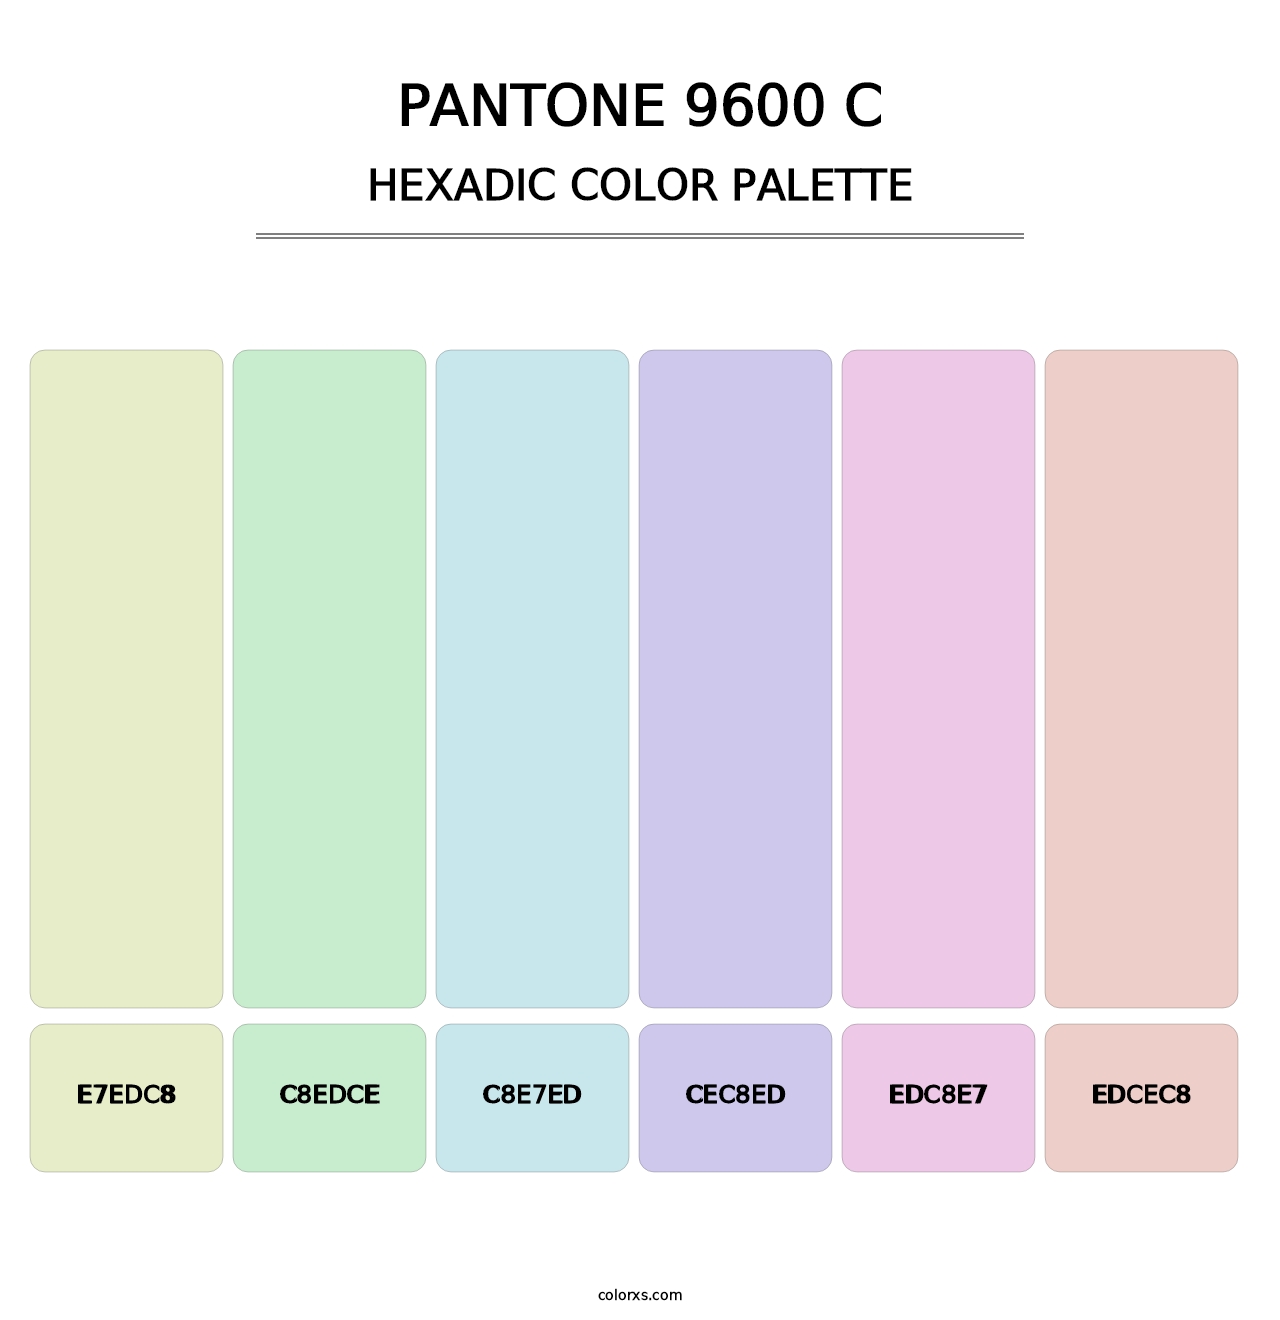 PANTONE 9600 C - Hexadic Color Palette